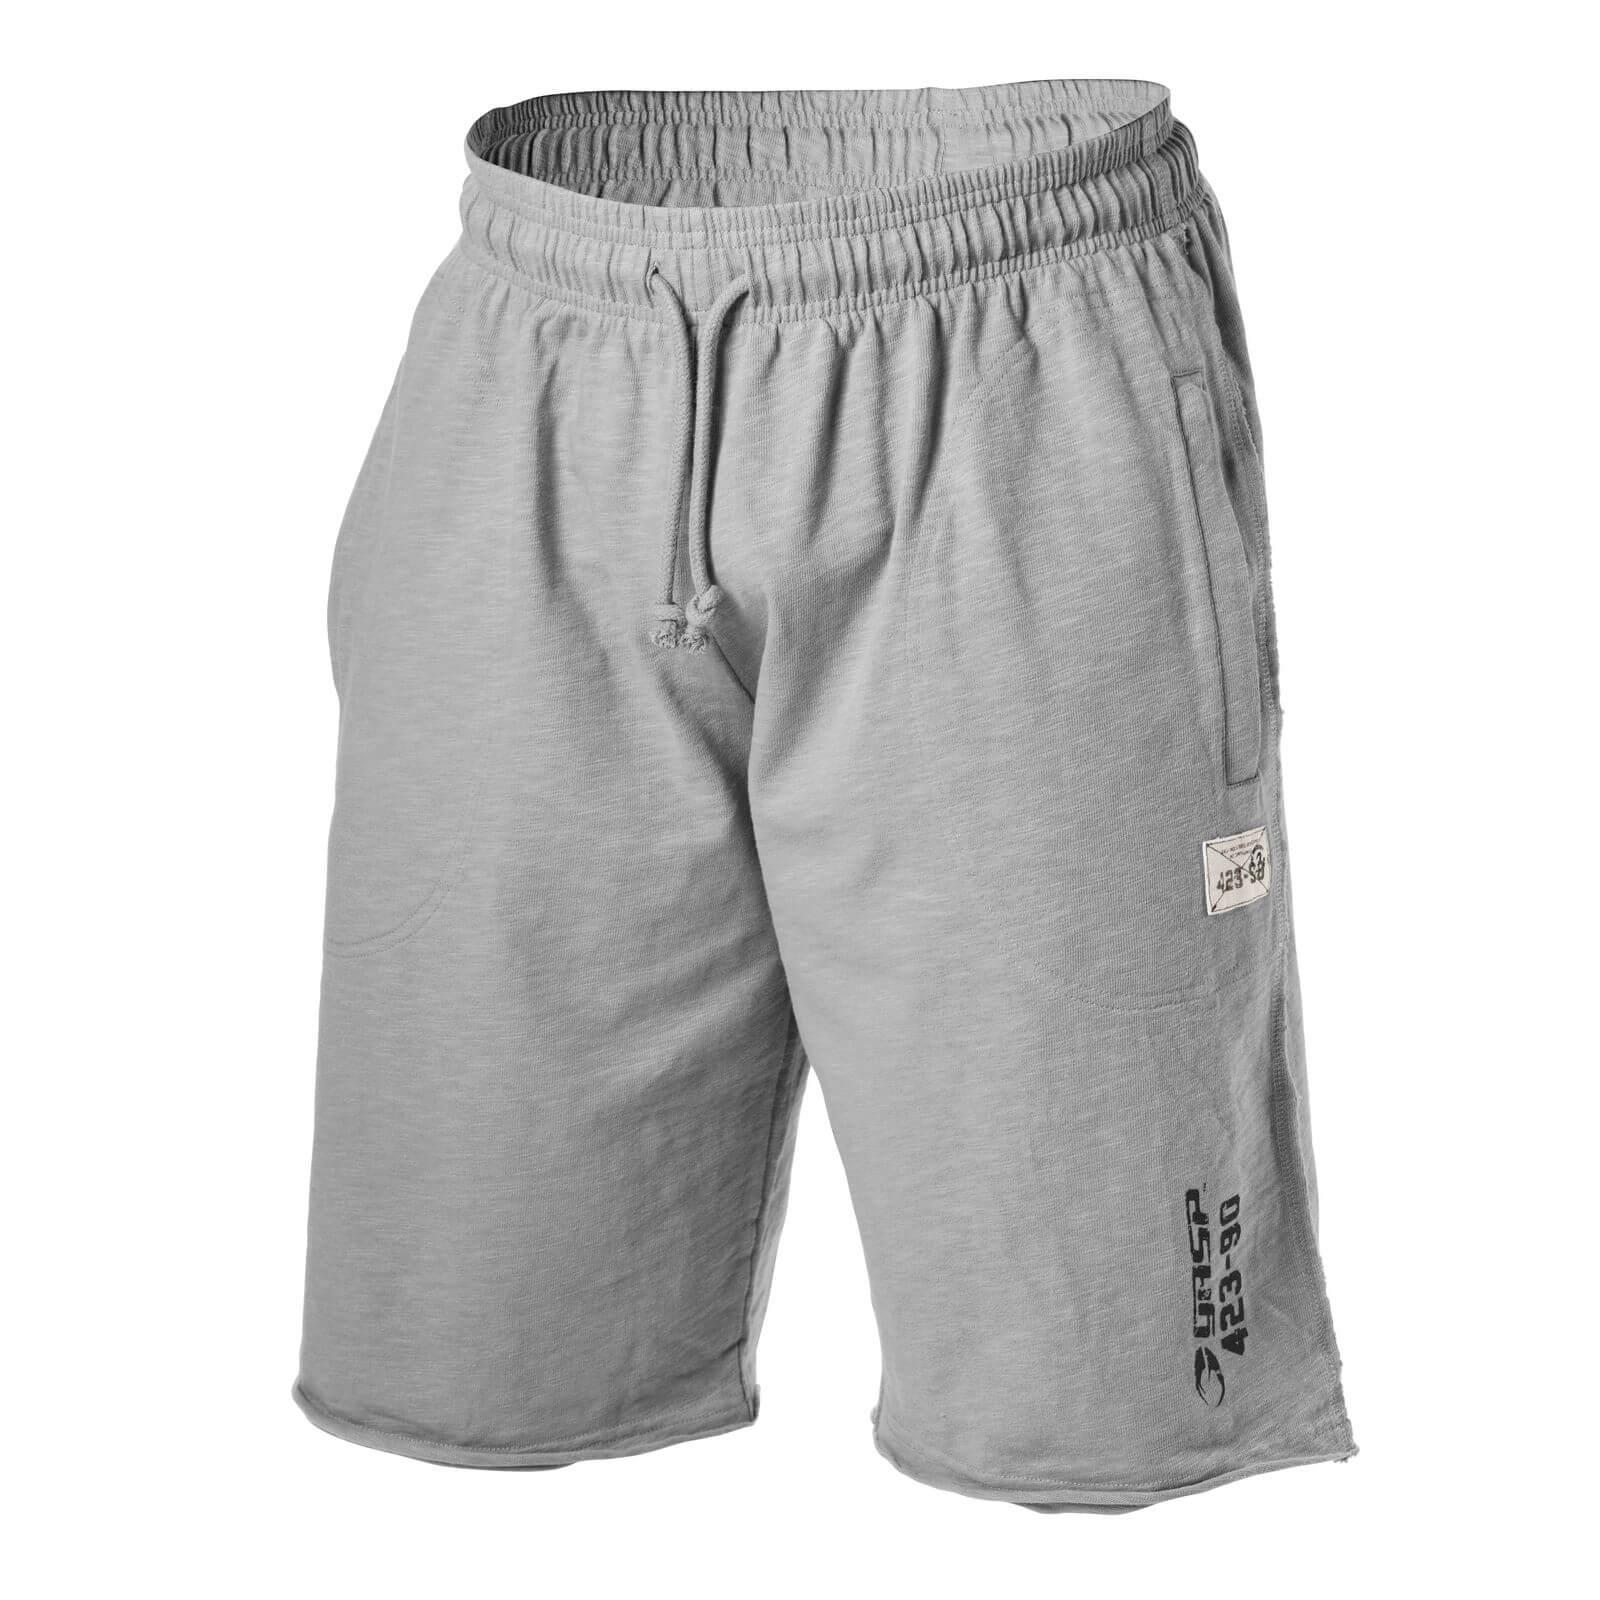 Kolla in Throwback Sweat Shorts, light grey, GASP hos SportGymButiken.se